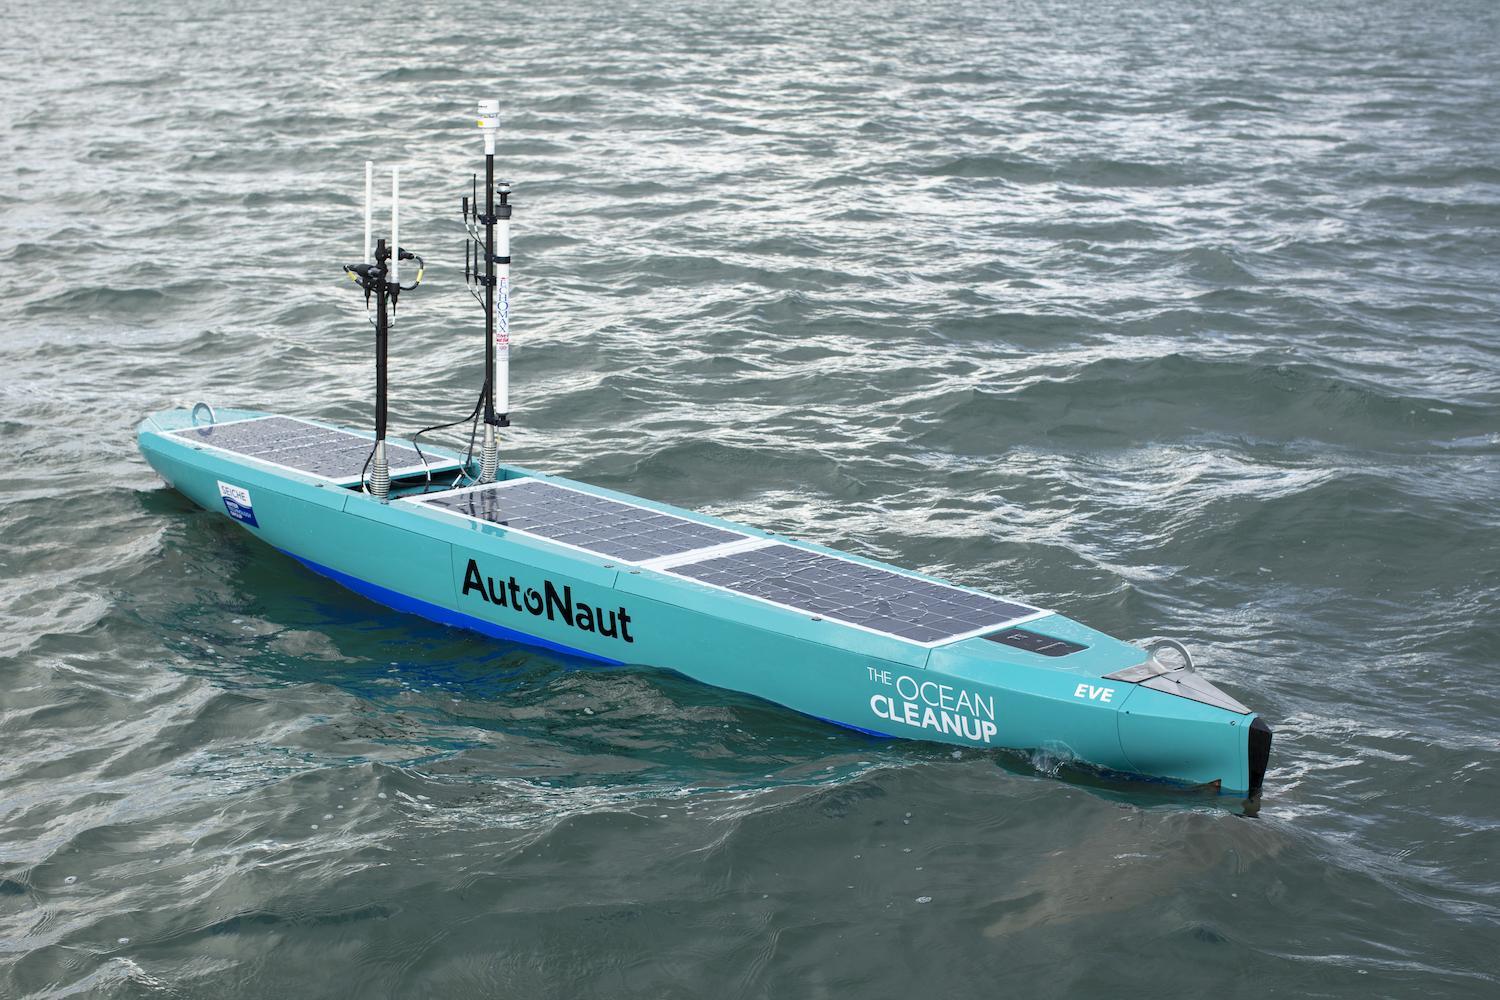 The Autonaut 5.0 USV equipped with the 1000 kHz version of Nortek’s Signature VM Ocean system